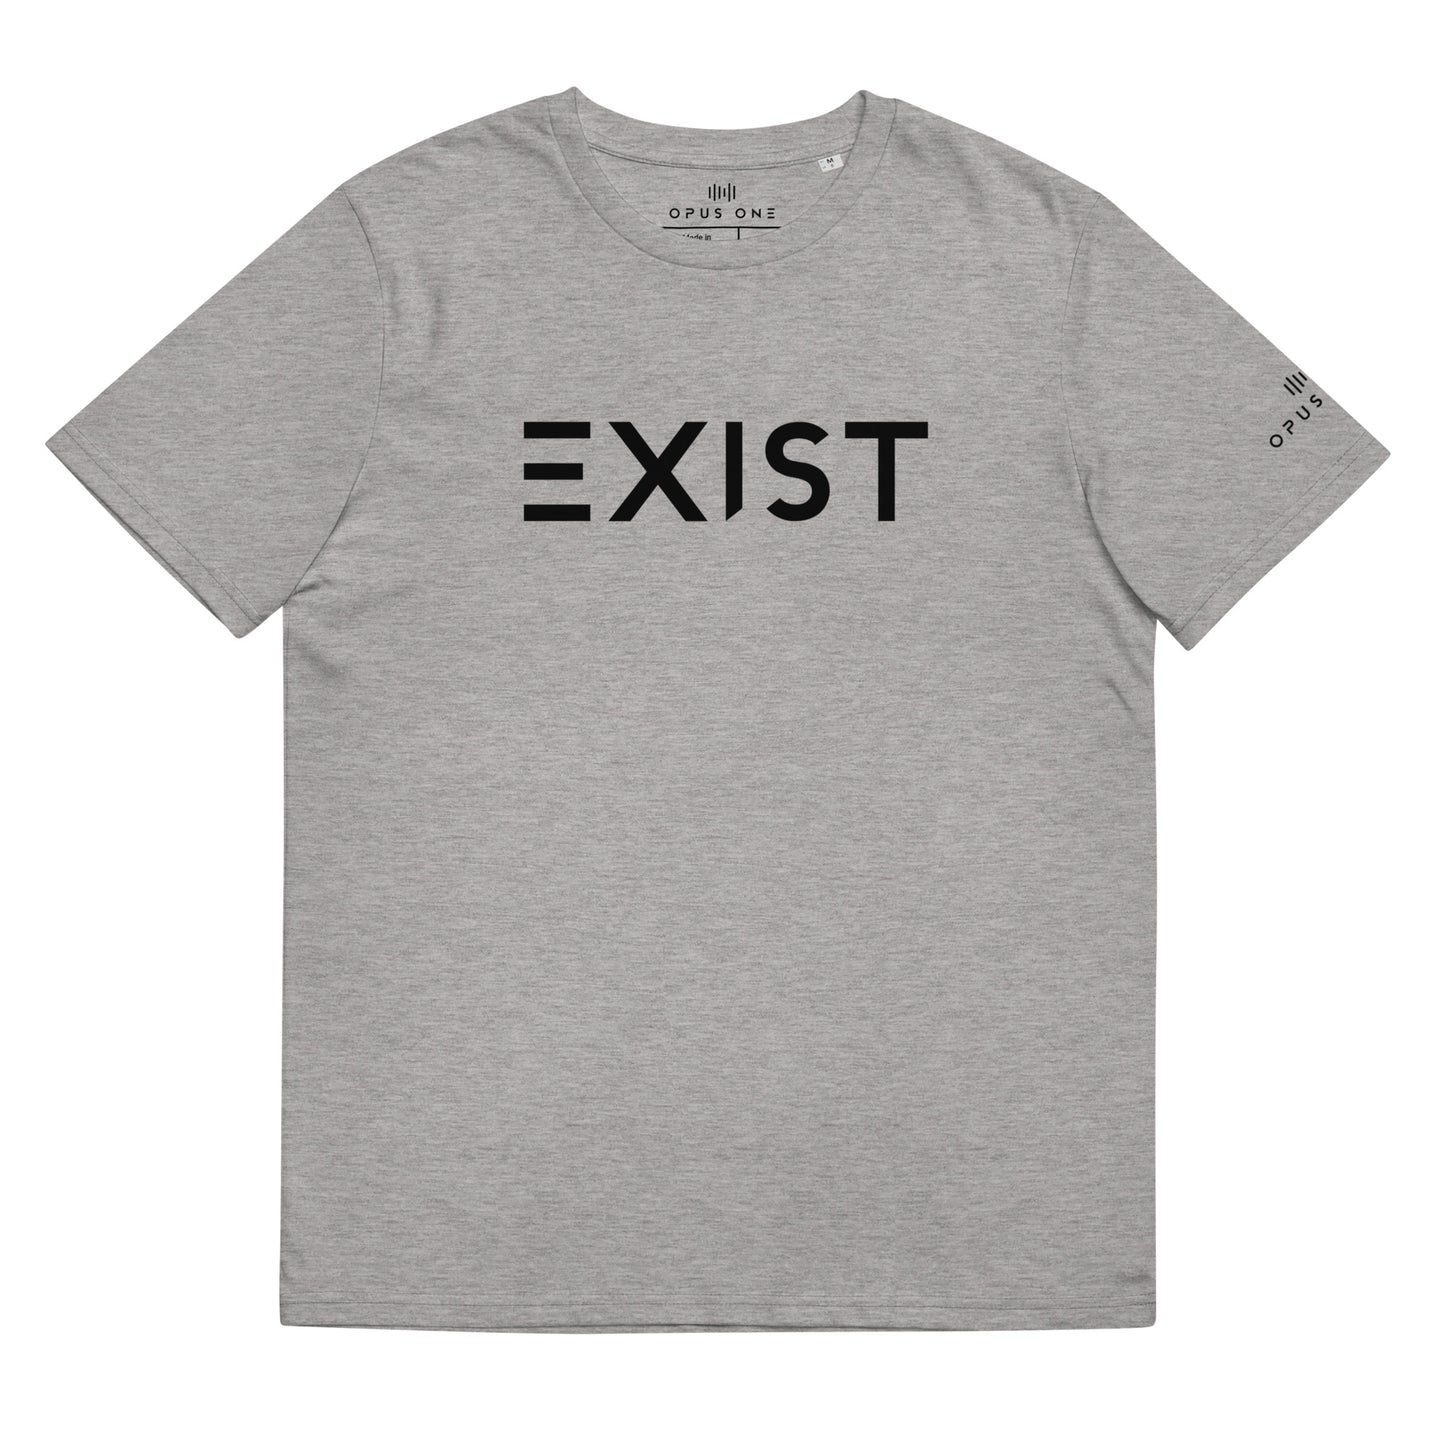 Ltd (Exist v1) Unisex organic cotton t-shirt (Black Text)